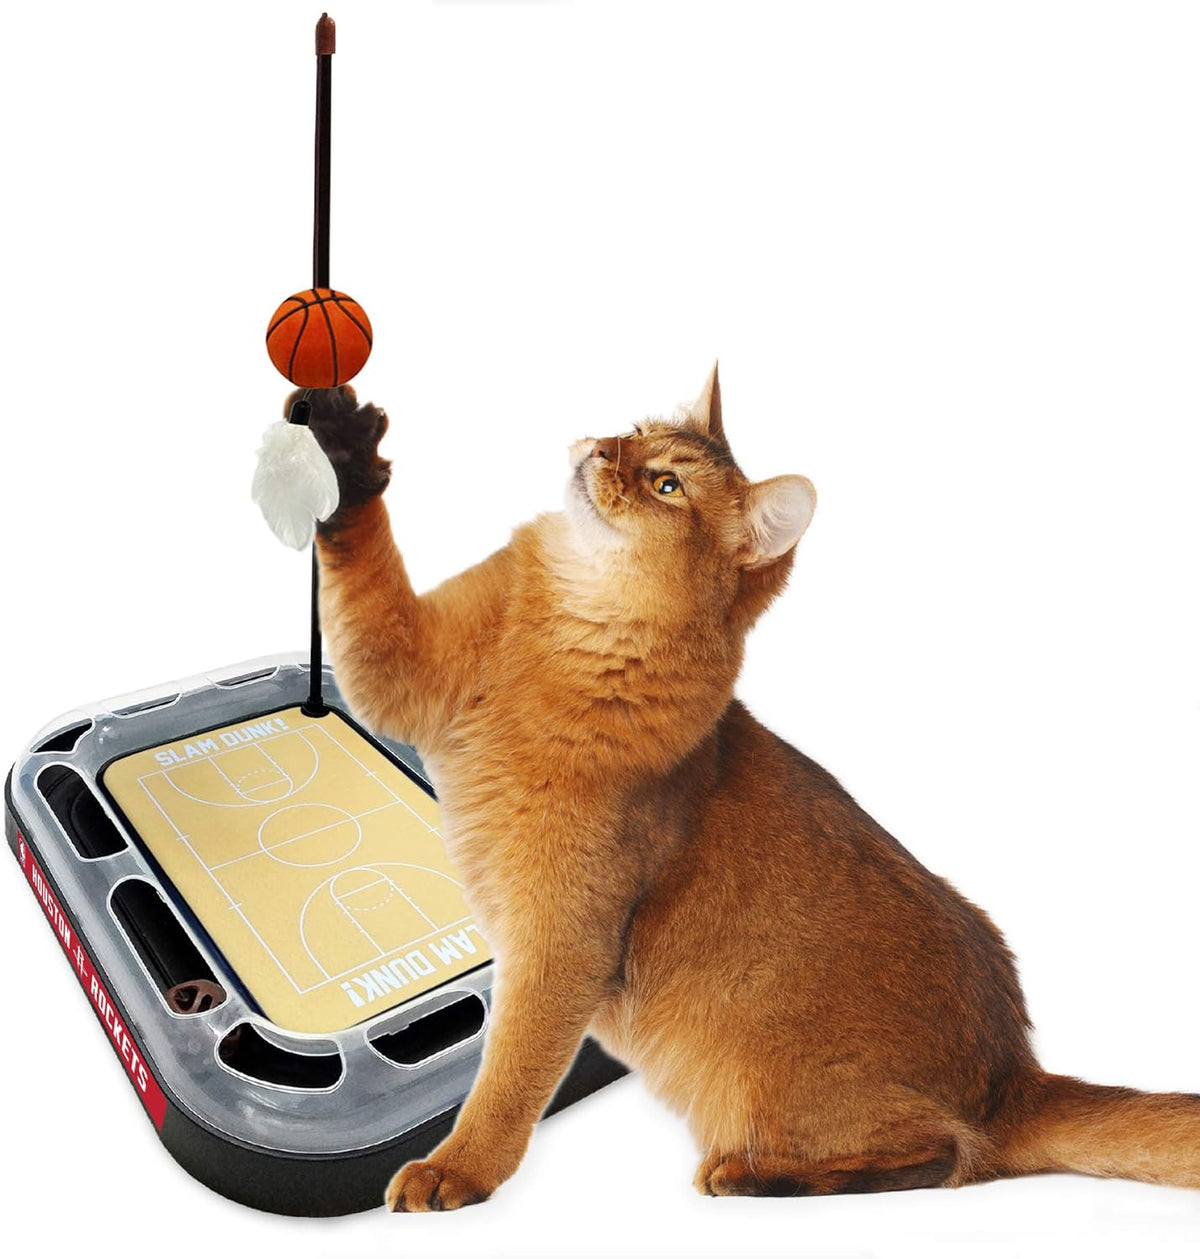 Houston Rockets Basketball Cat Scratcher Toy